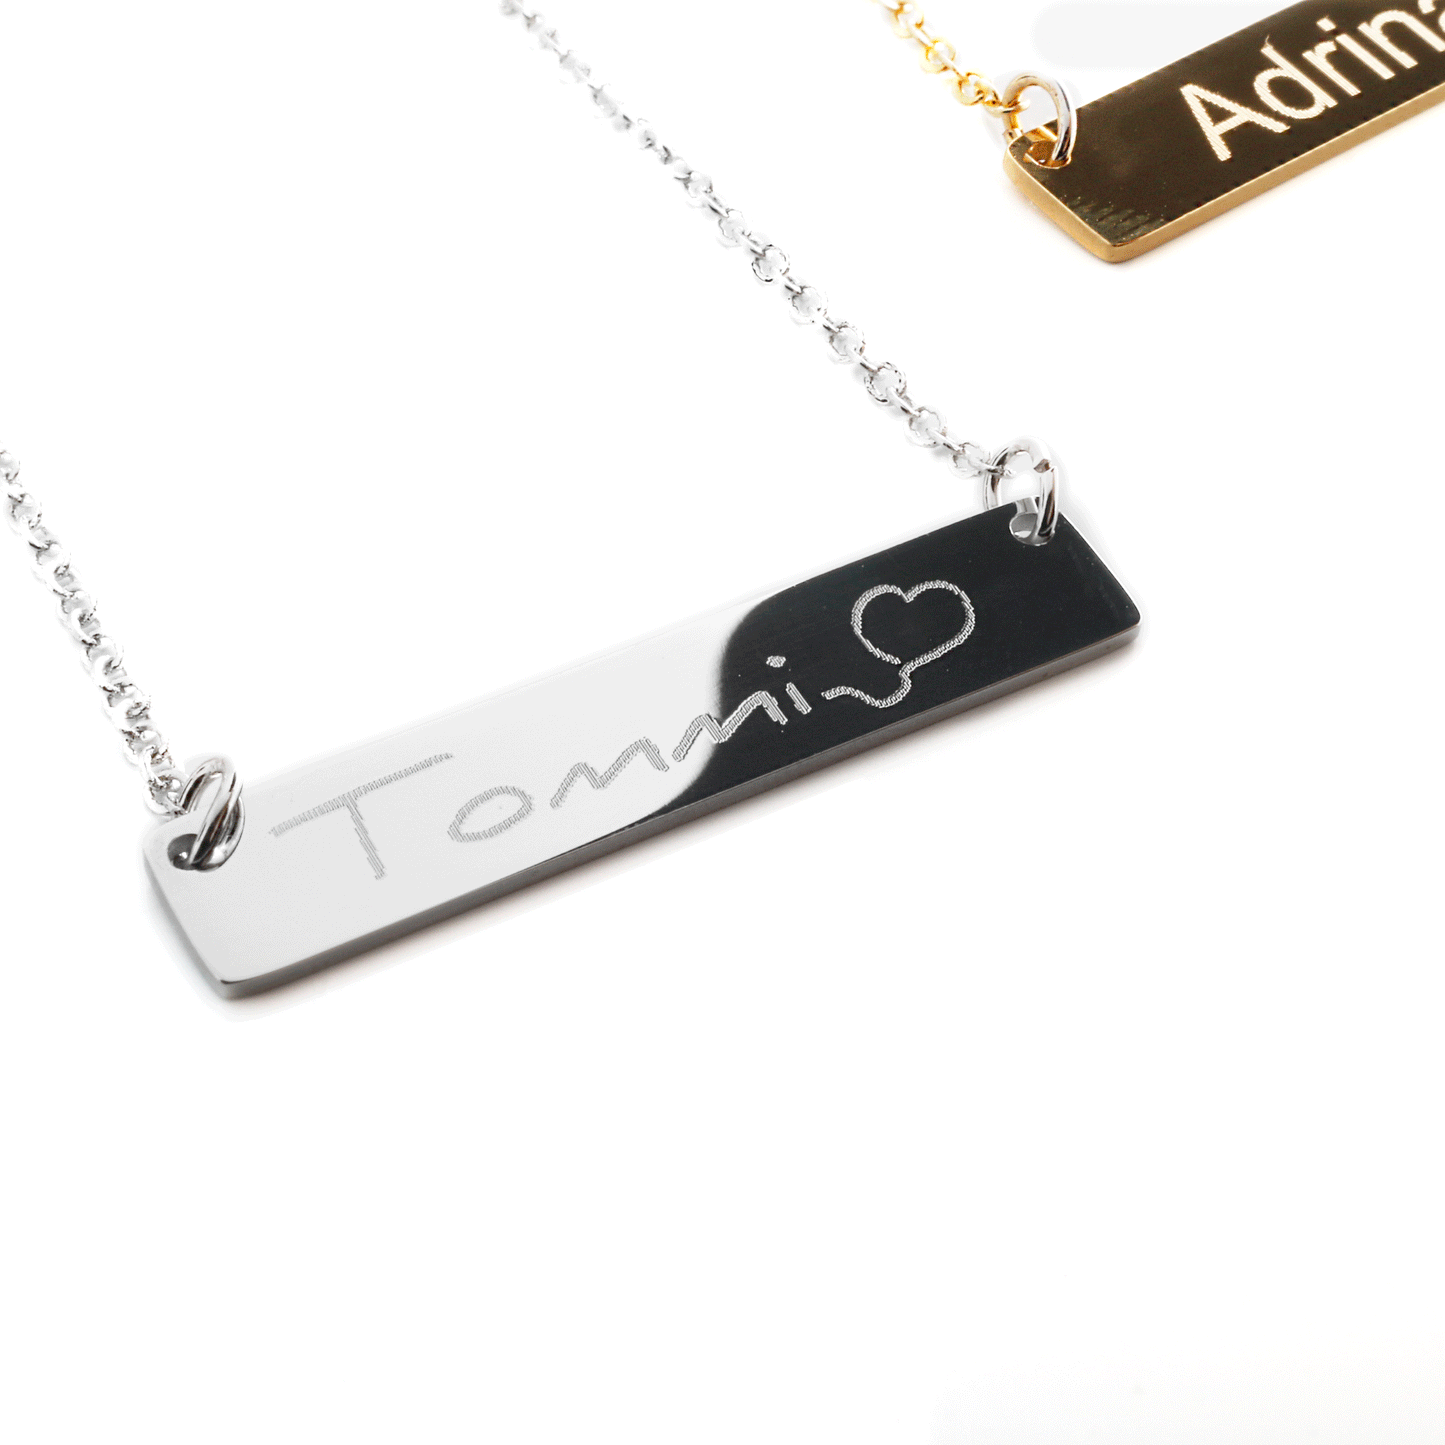 Minimalist Name Necklace - Best Friend Gift